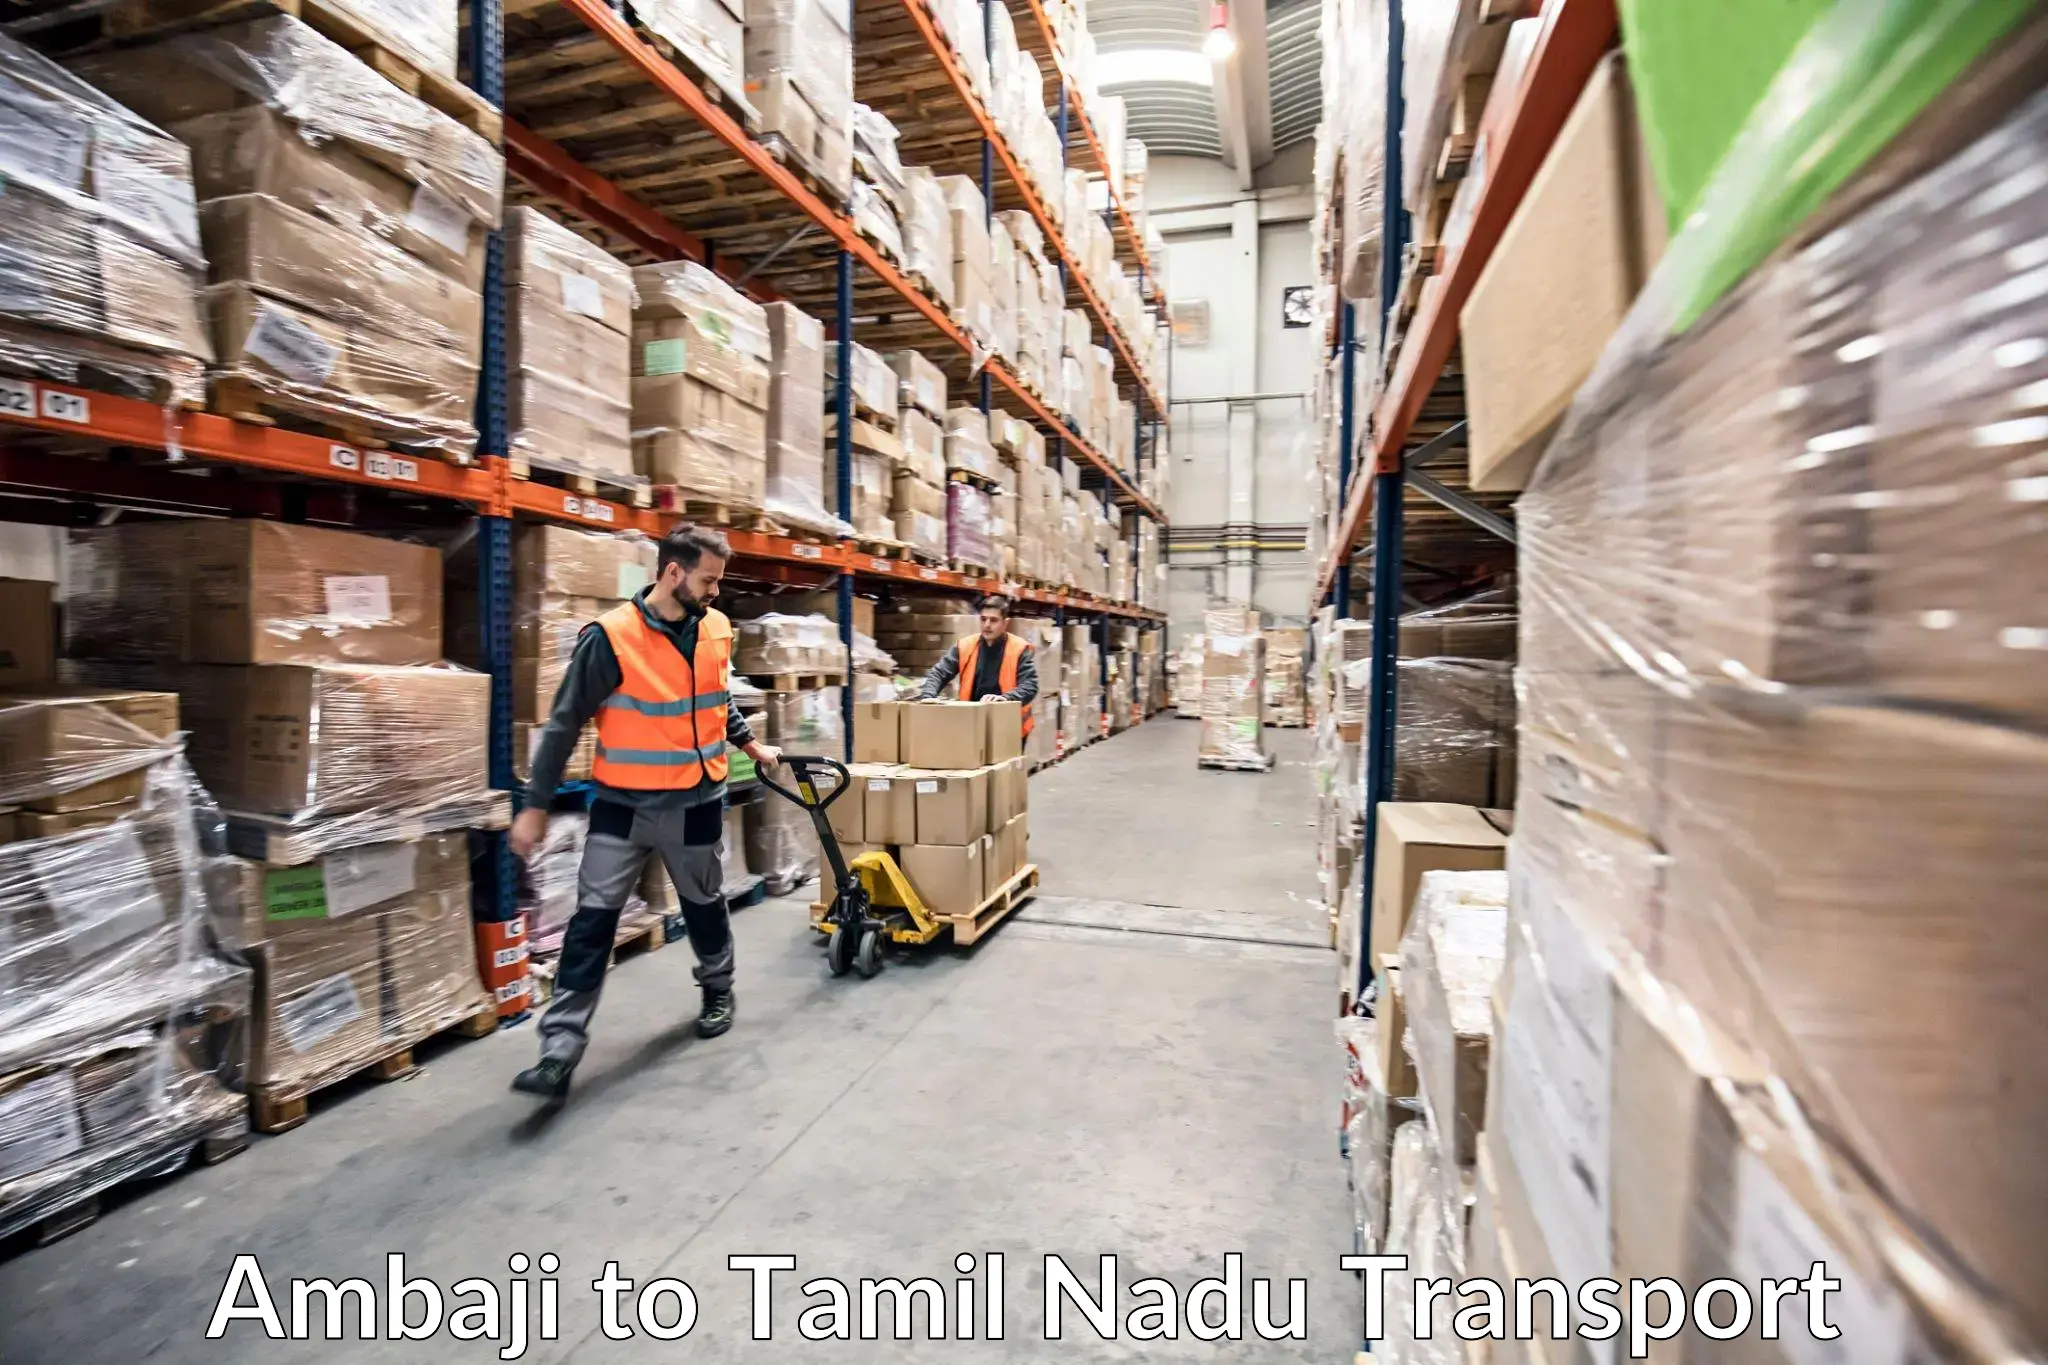 Truck transport companies in India Ambaji to Chennai Port